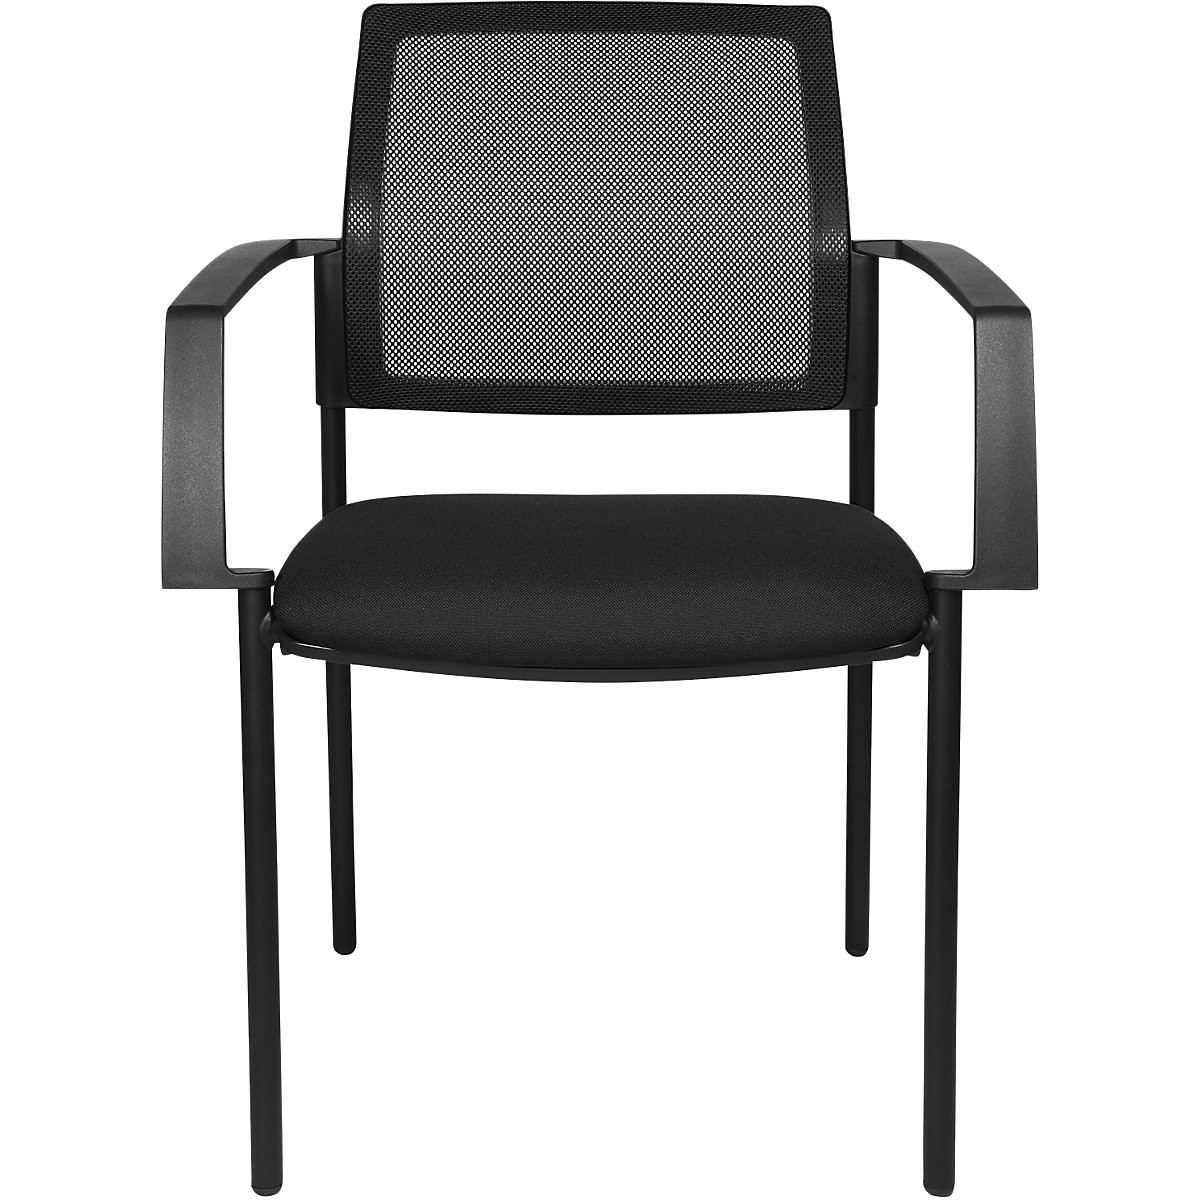 Mesh stacking chair - Topstar